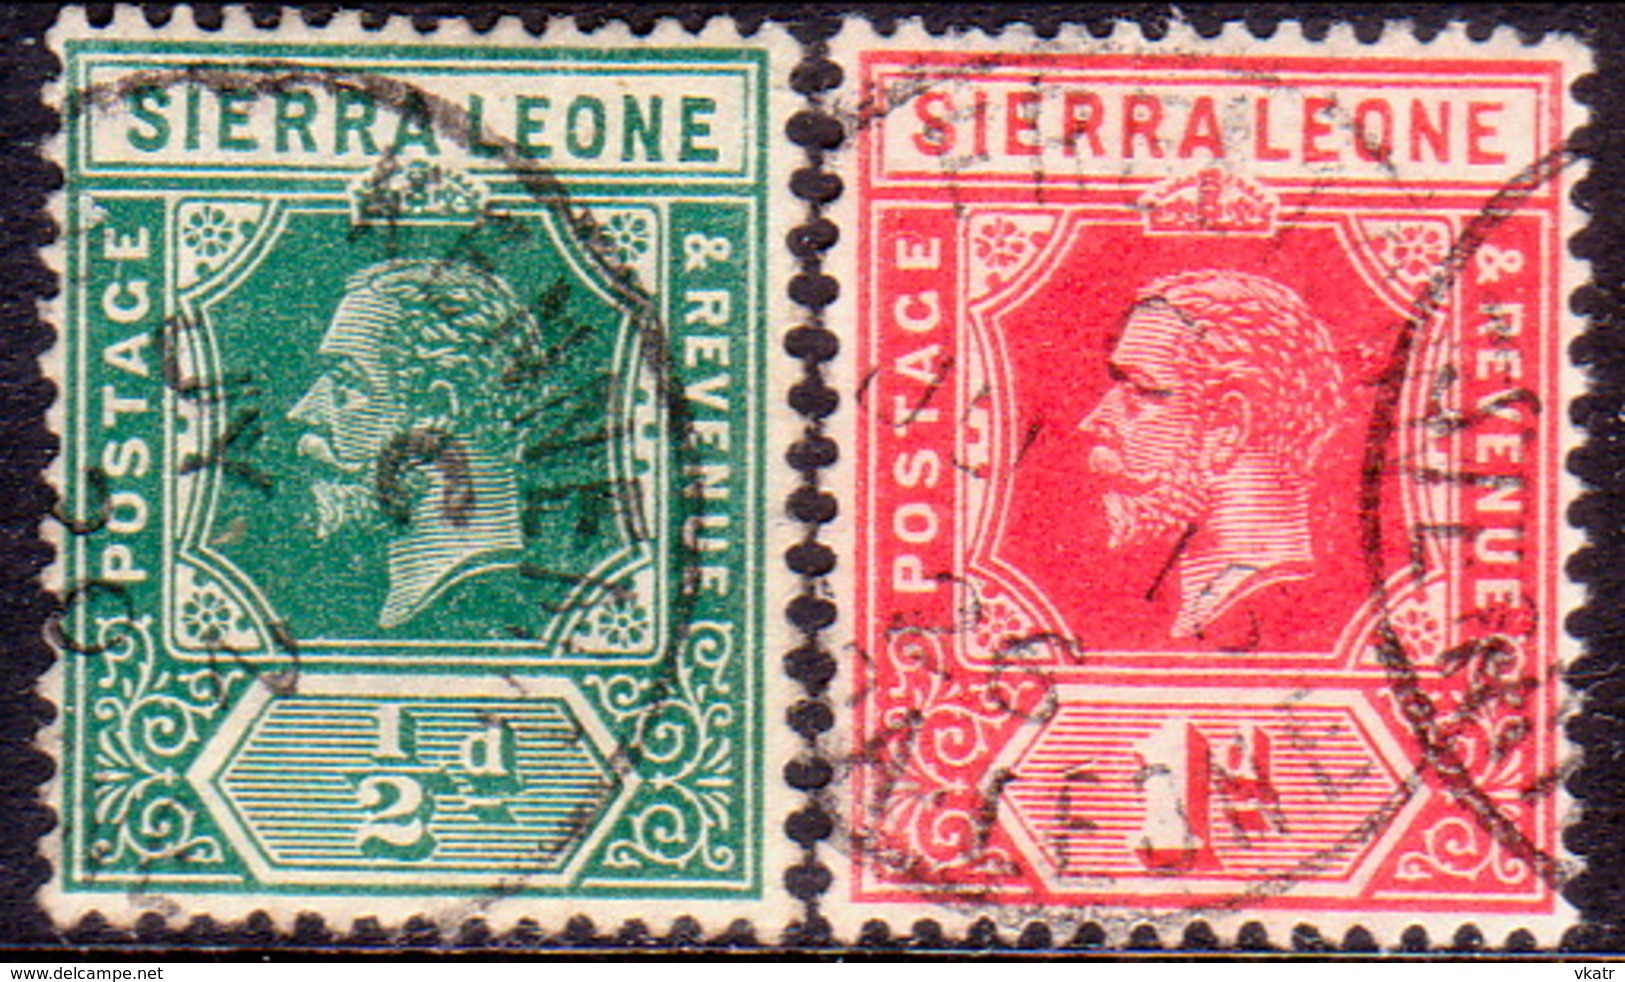 SIERRA LEONE 1912-18 SG #112,113b ½d,1d Two Used Stamps With Wmk Mult.Crown CA - Sierra Leone (...-1960)